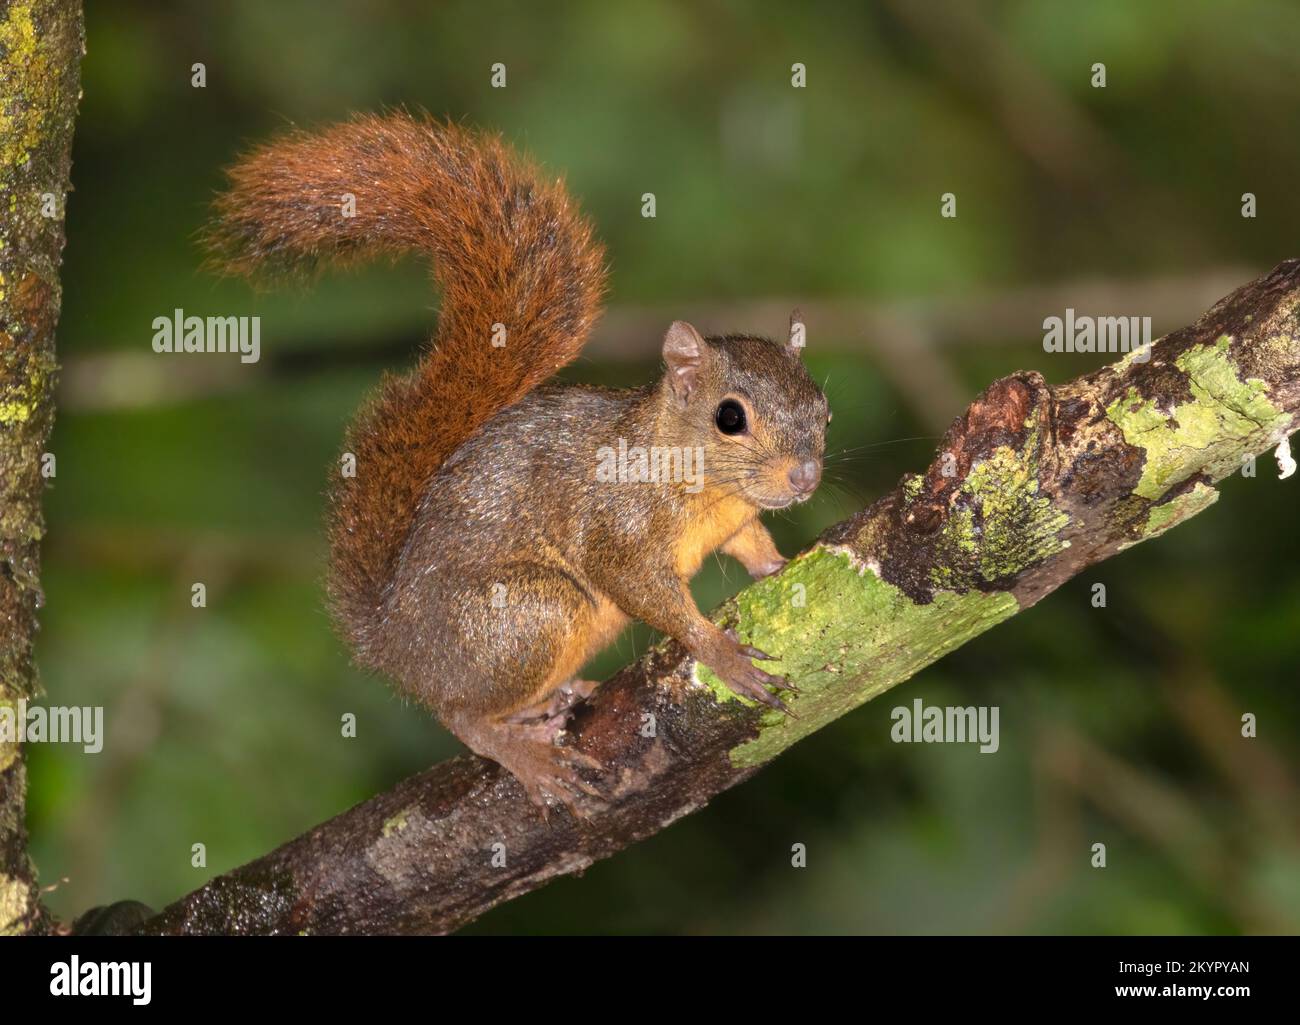 The red-tailed squirrel (Sciurus granatensis) in the rainforest of Costa Rica Stock Photo